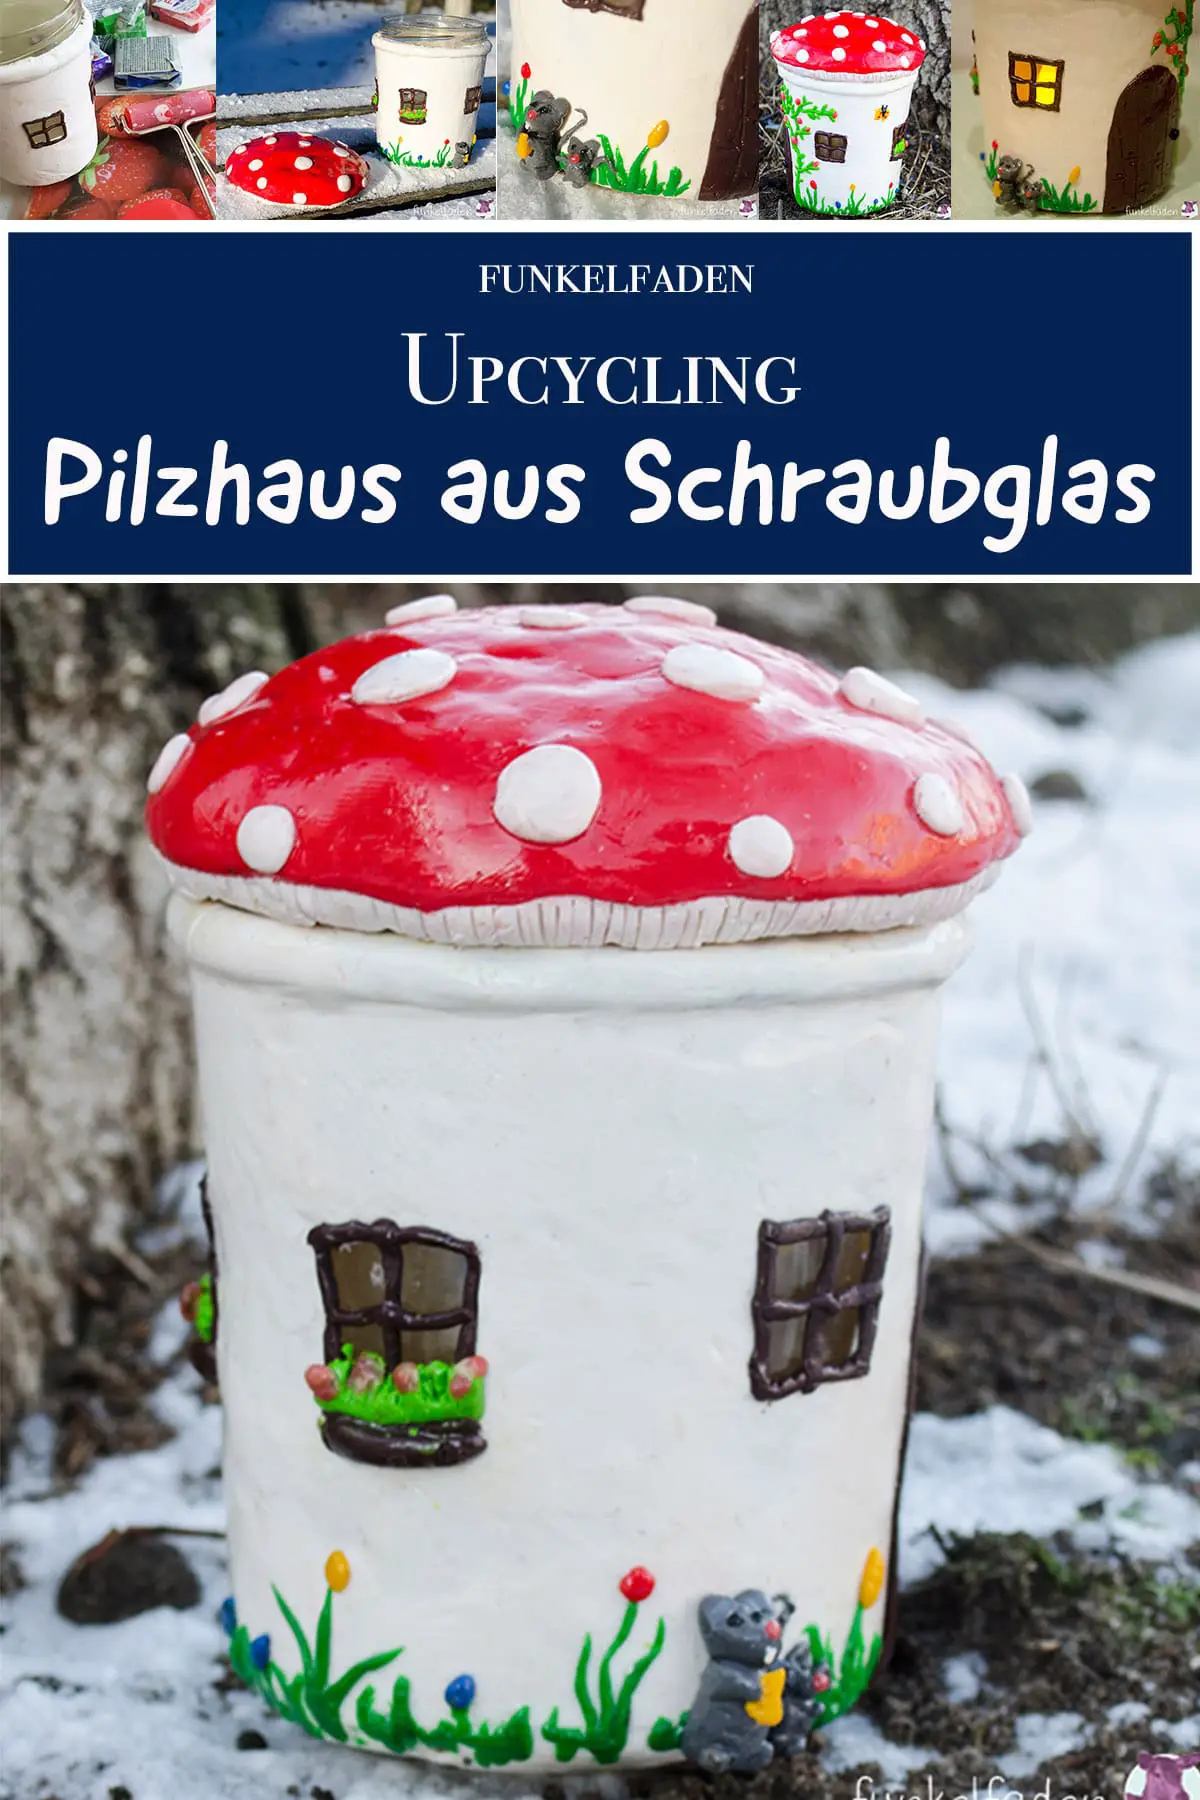 Upcycling mit Gläsern Pilzhaus basteln